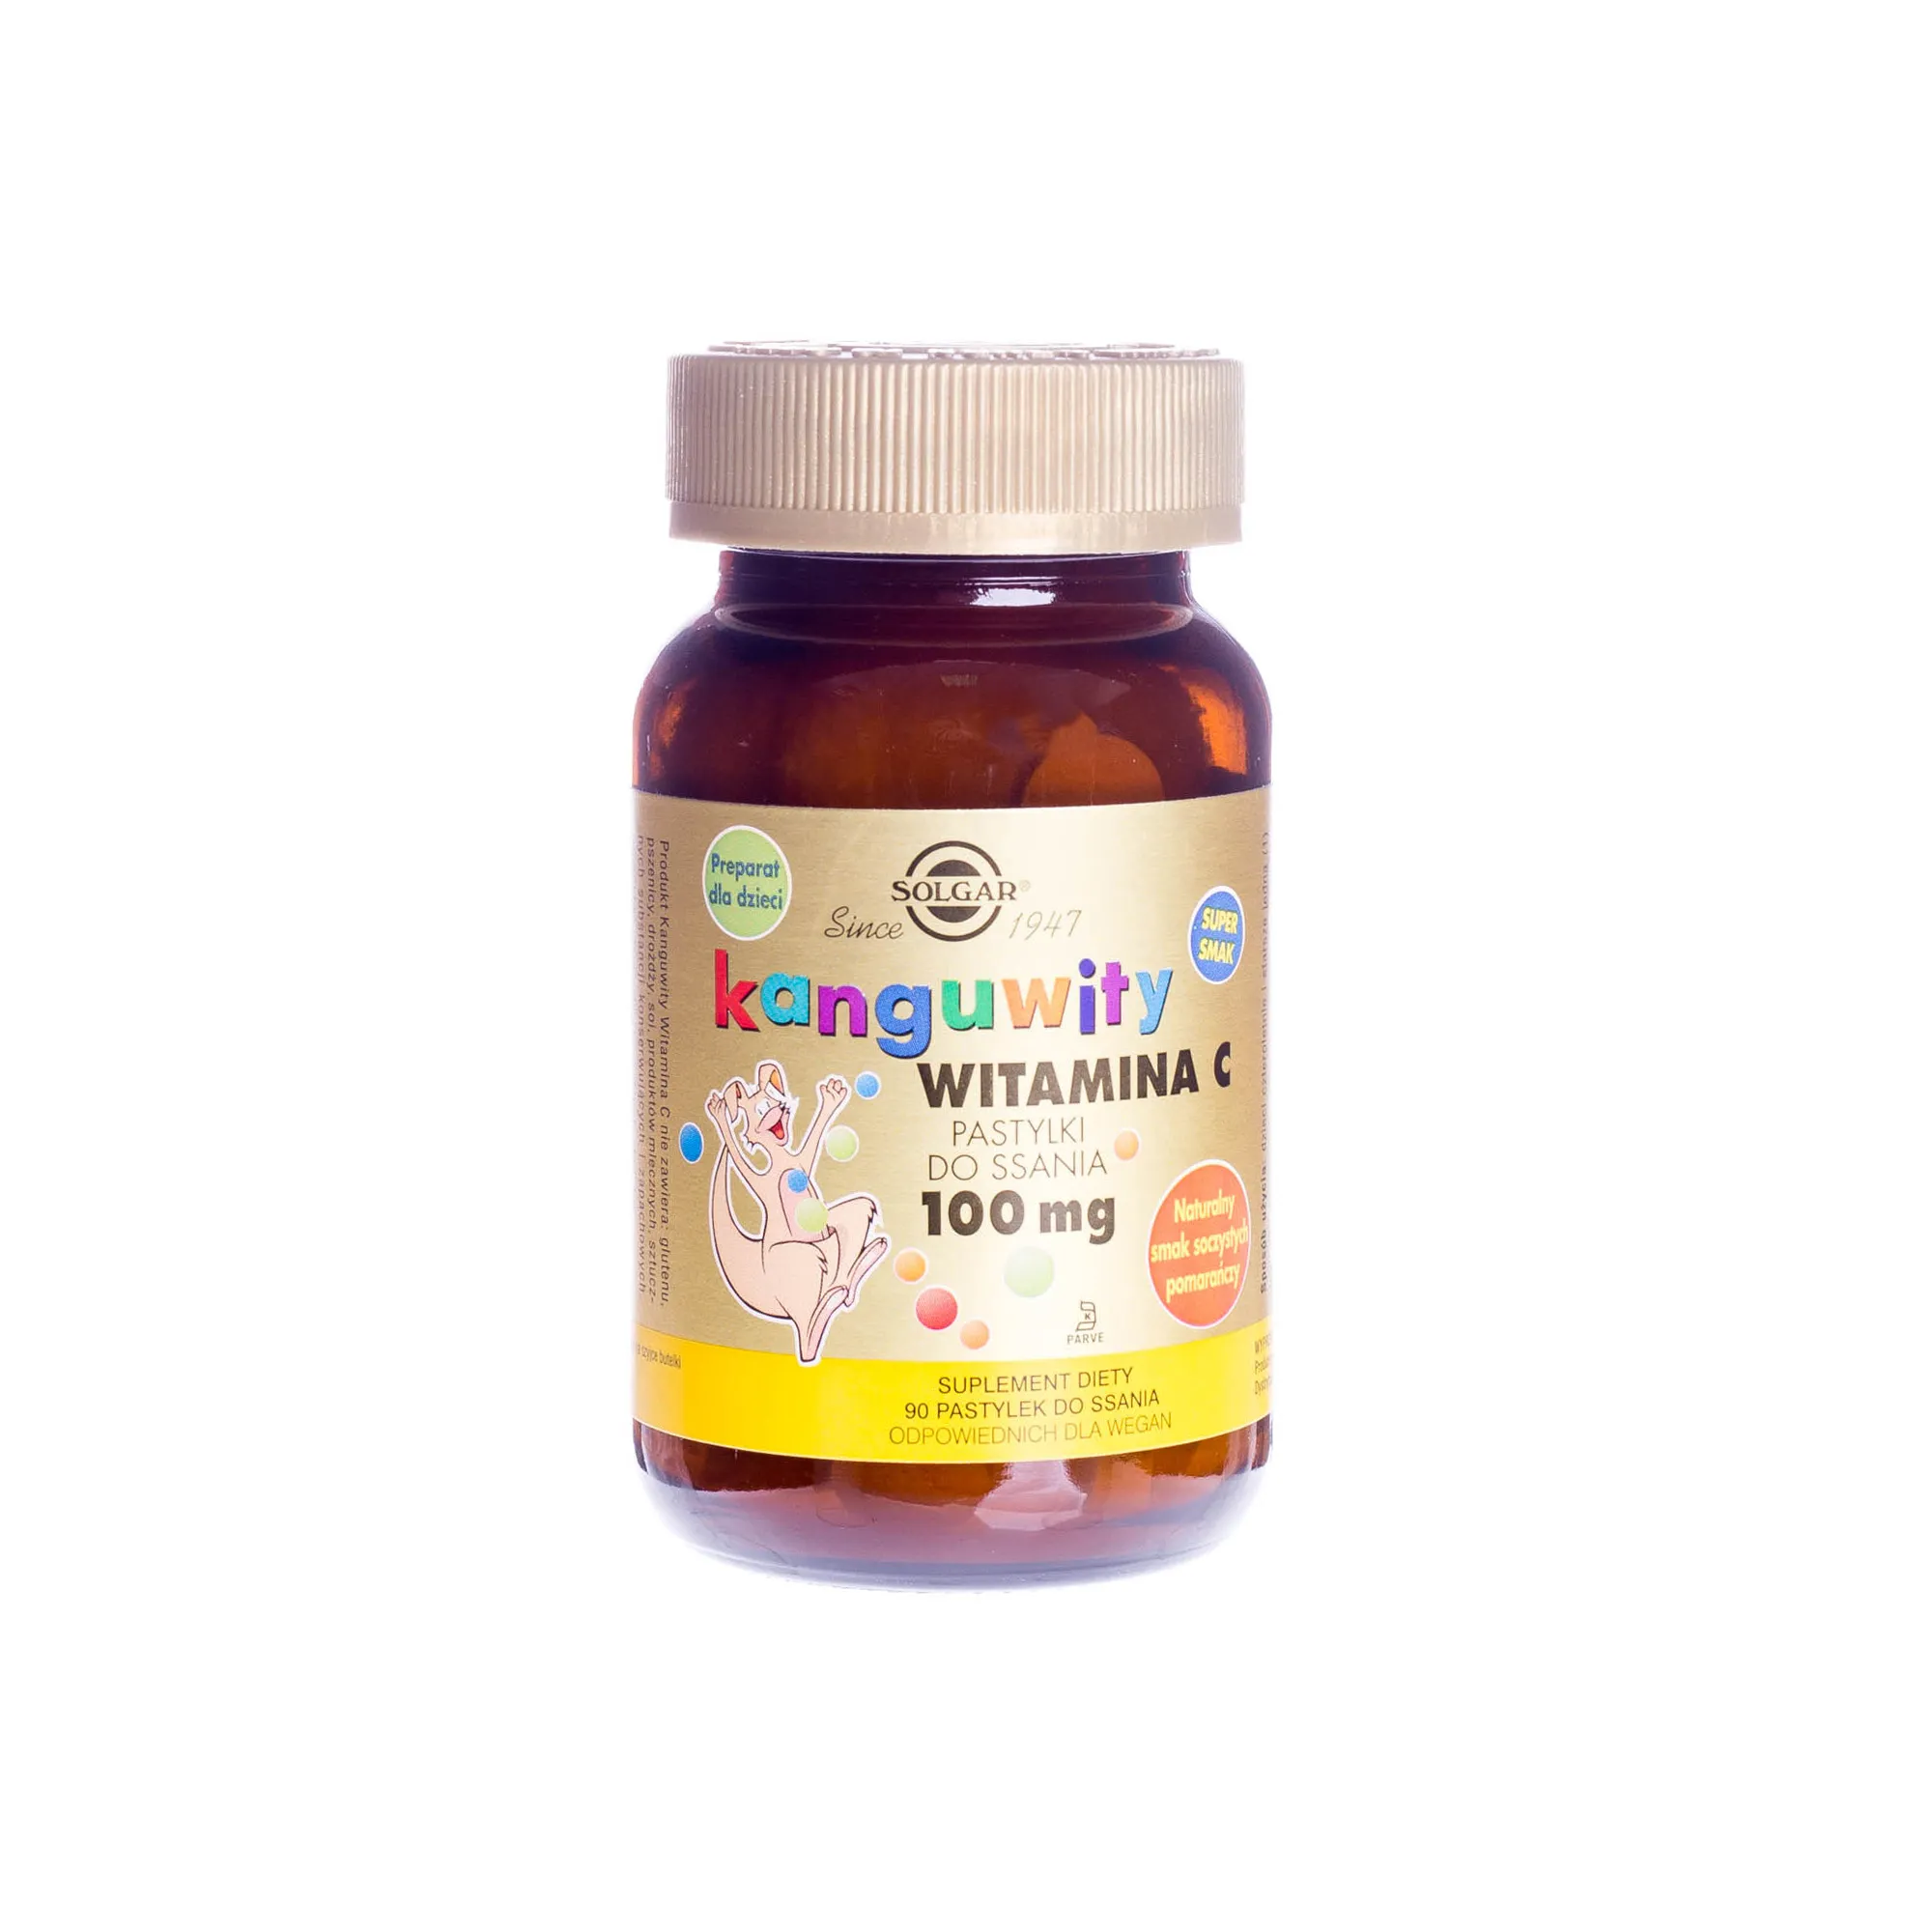 Solgar kanguwity witamina C 100 mg, suplement diety, 90 pastylek do ssania